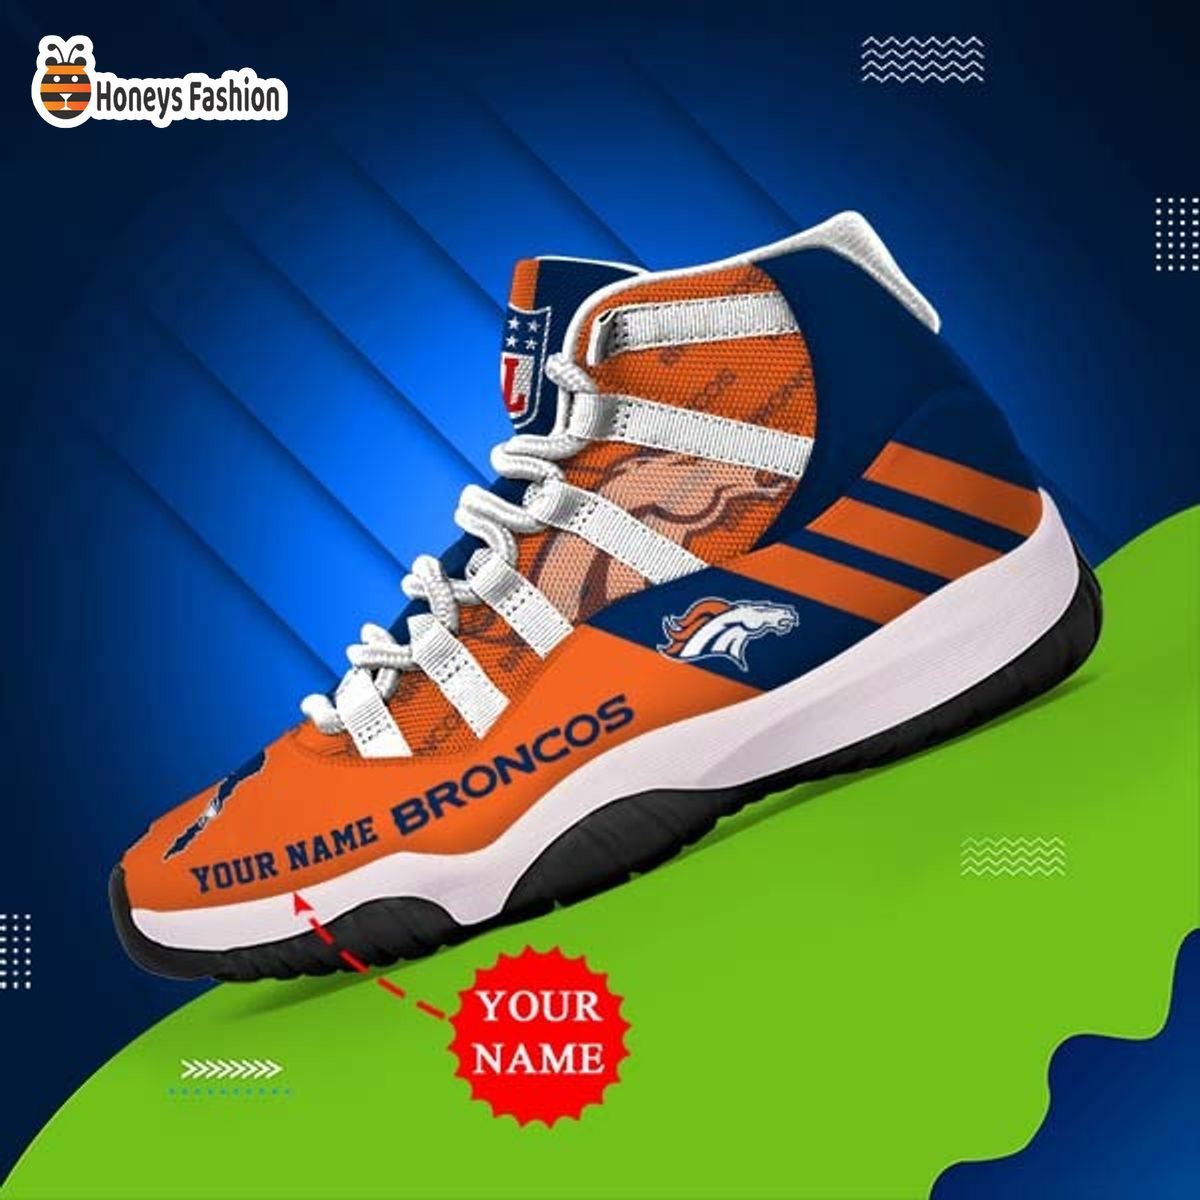 Denver Broncos NFL Adidas Personalized Air Jordan 11 Shoes